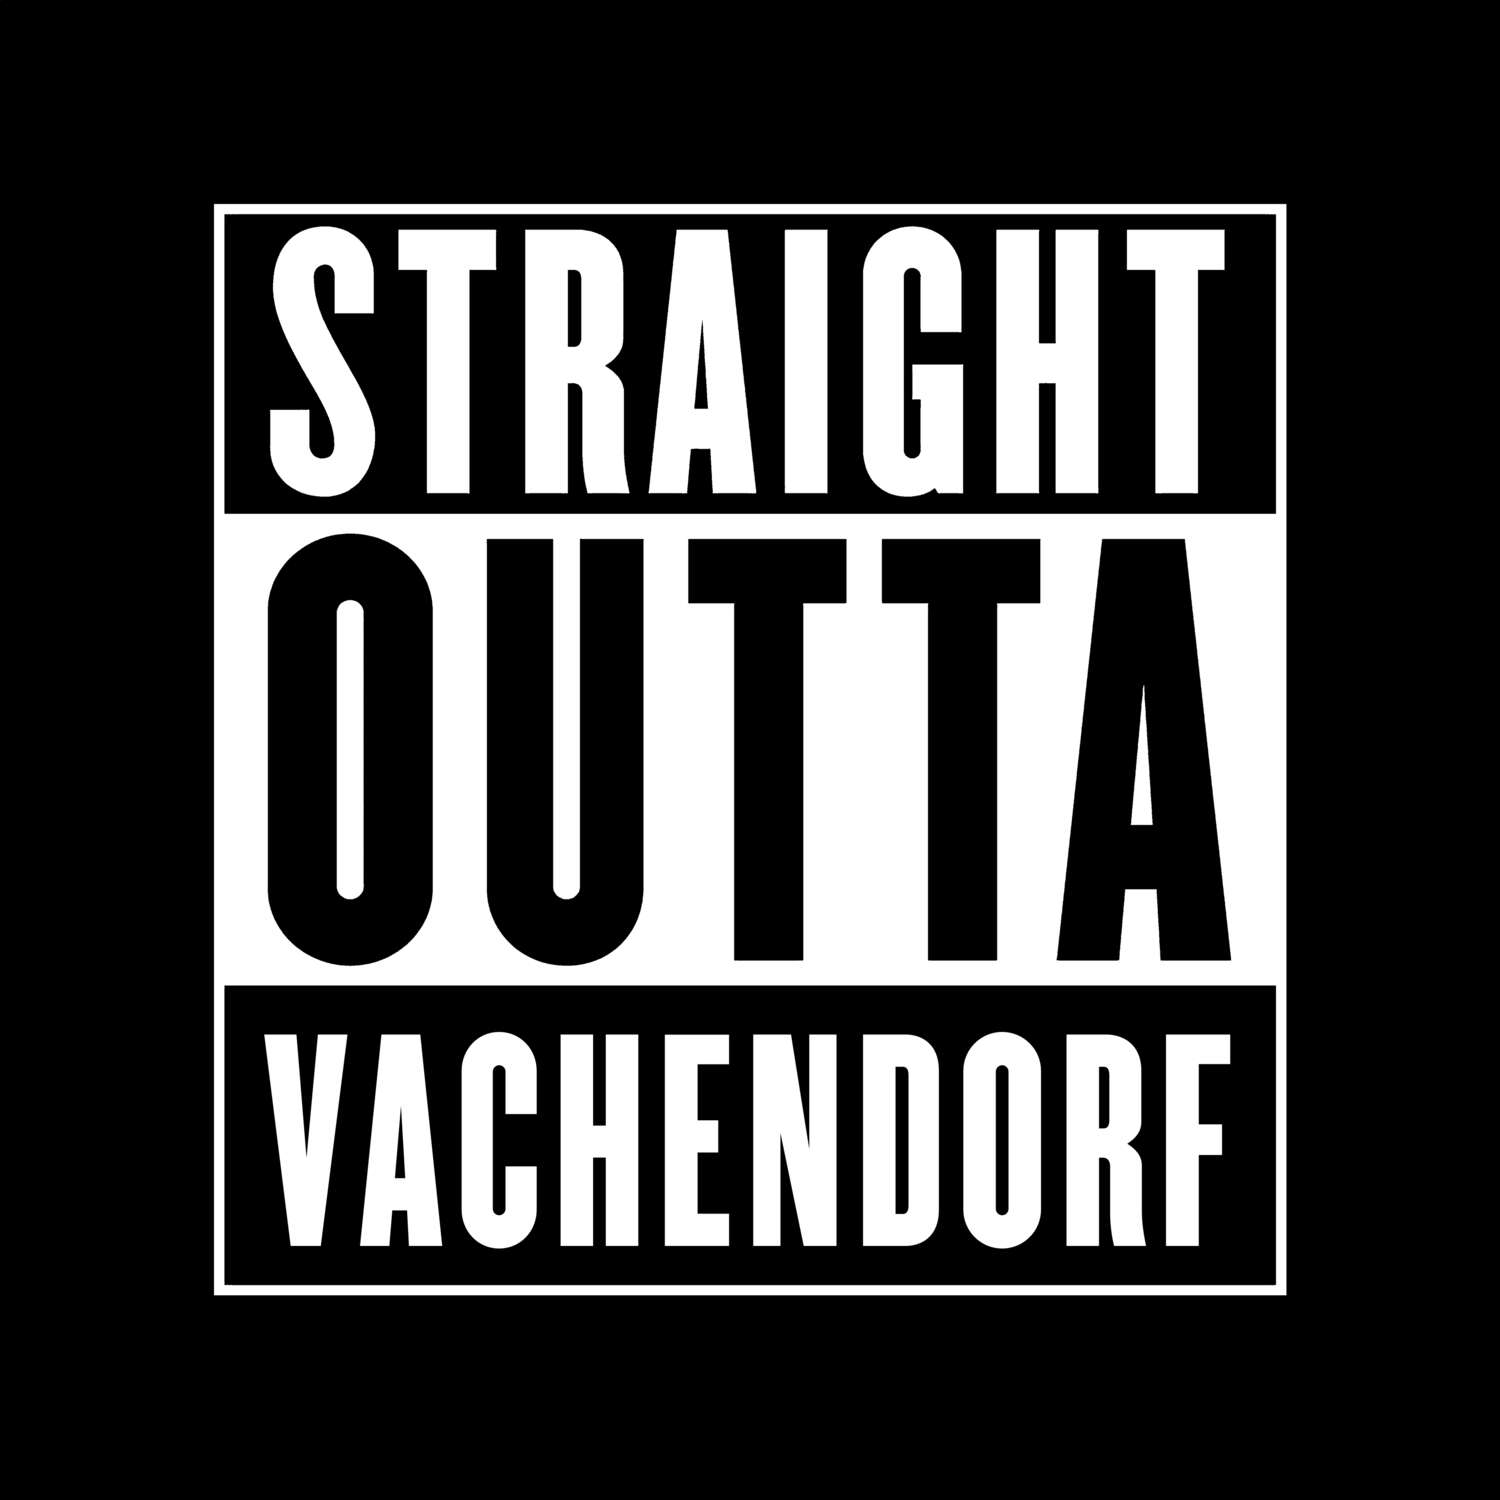 Vachendorf T-Shirt »Straight Outta«